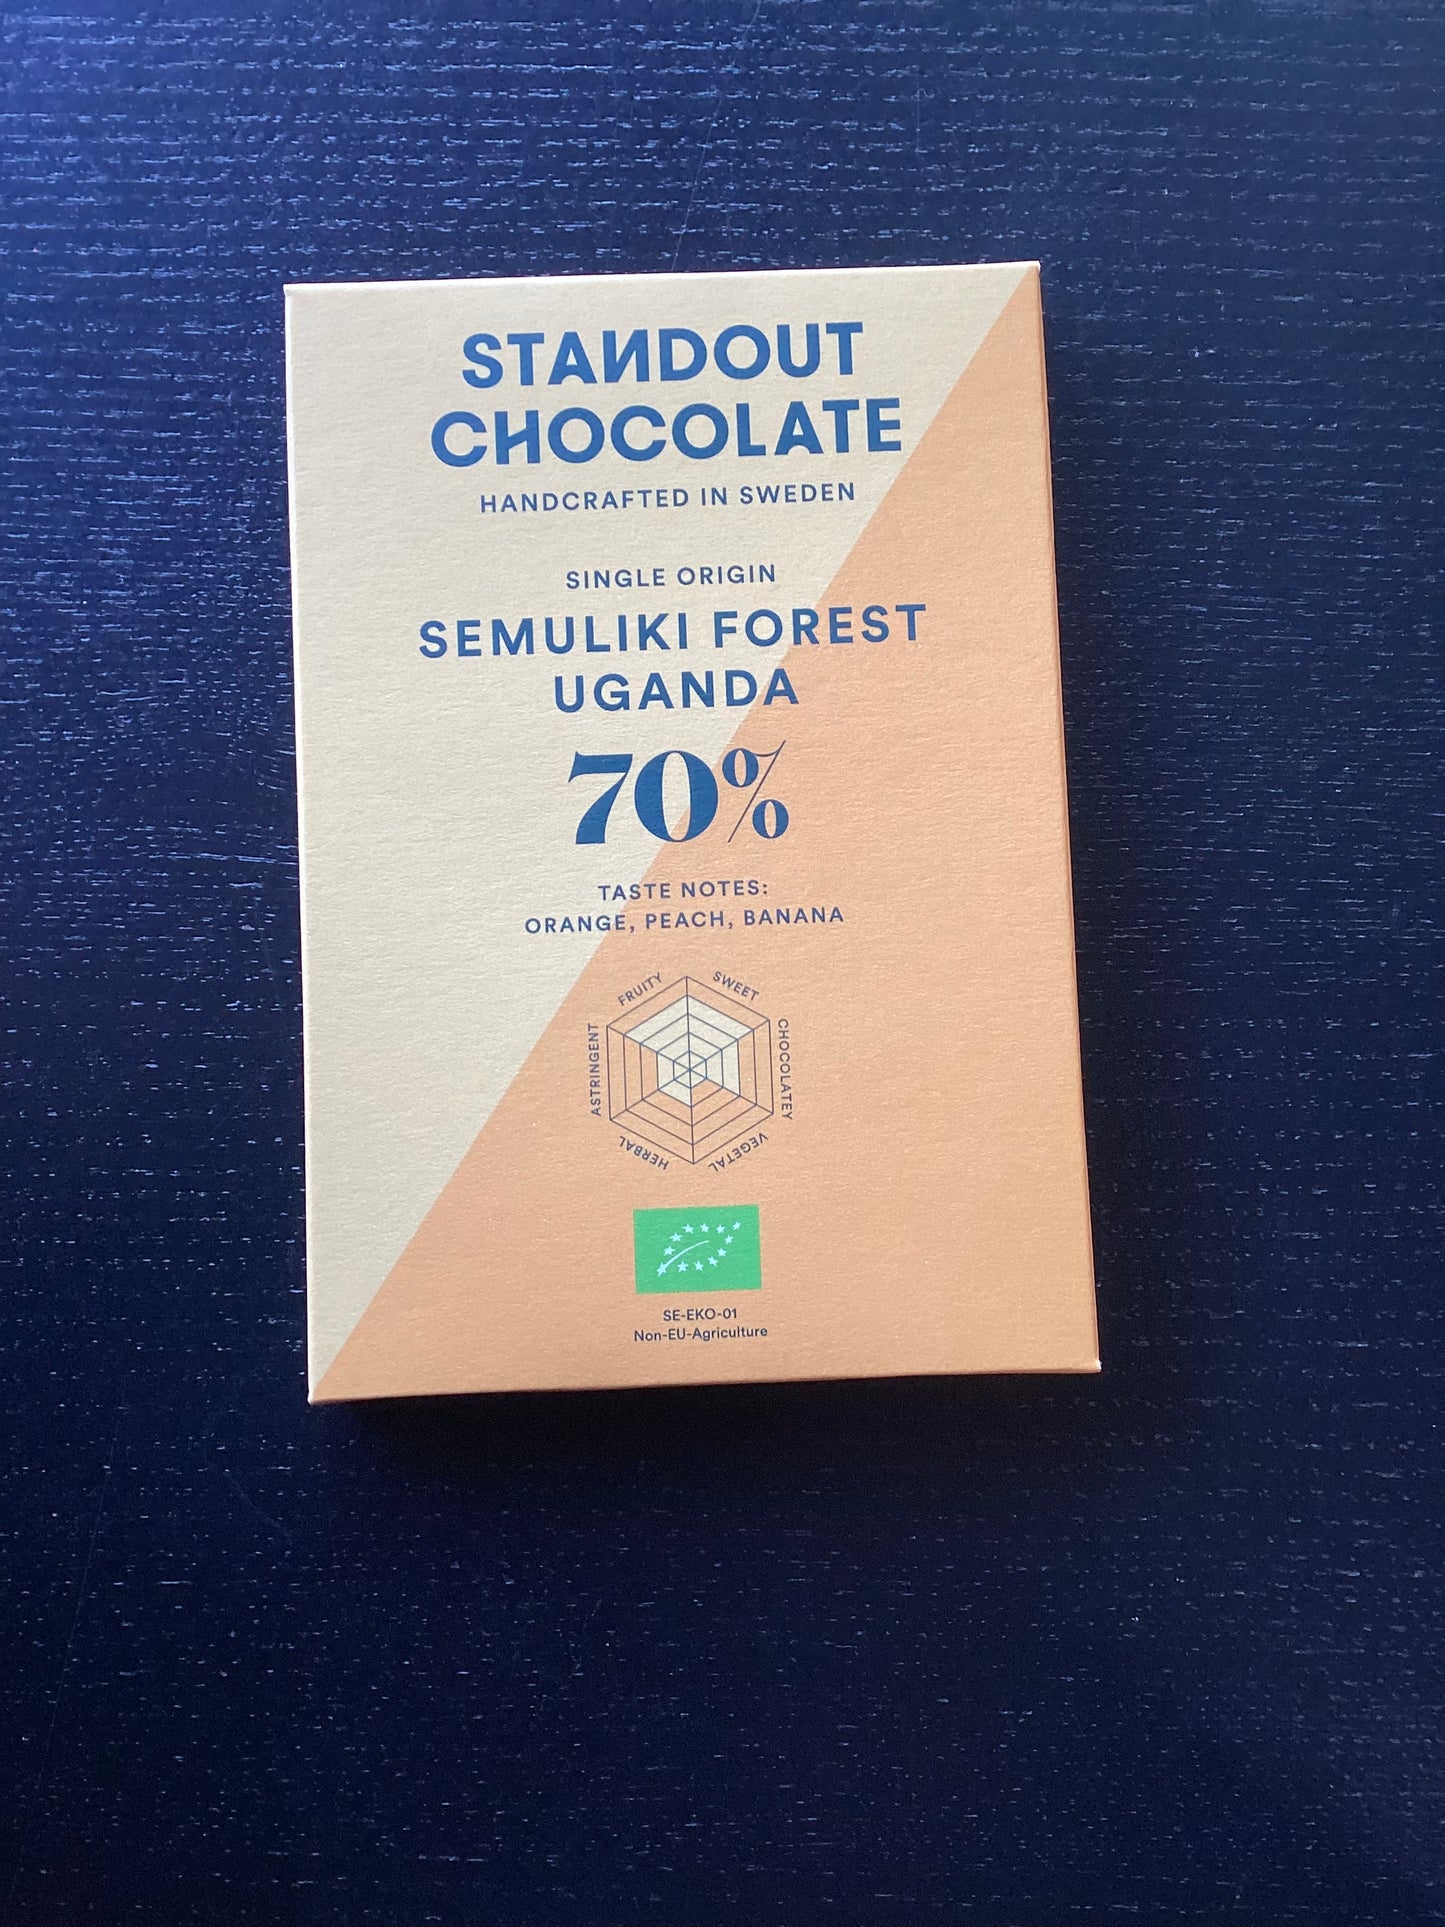 Standout Semulki Forest Uganda